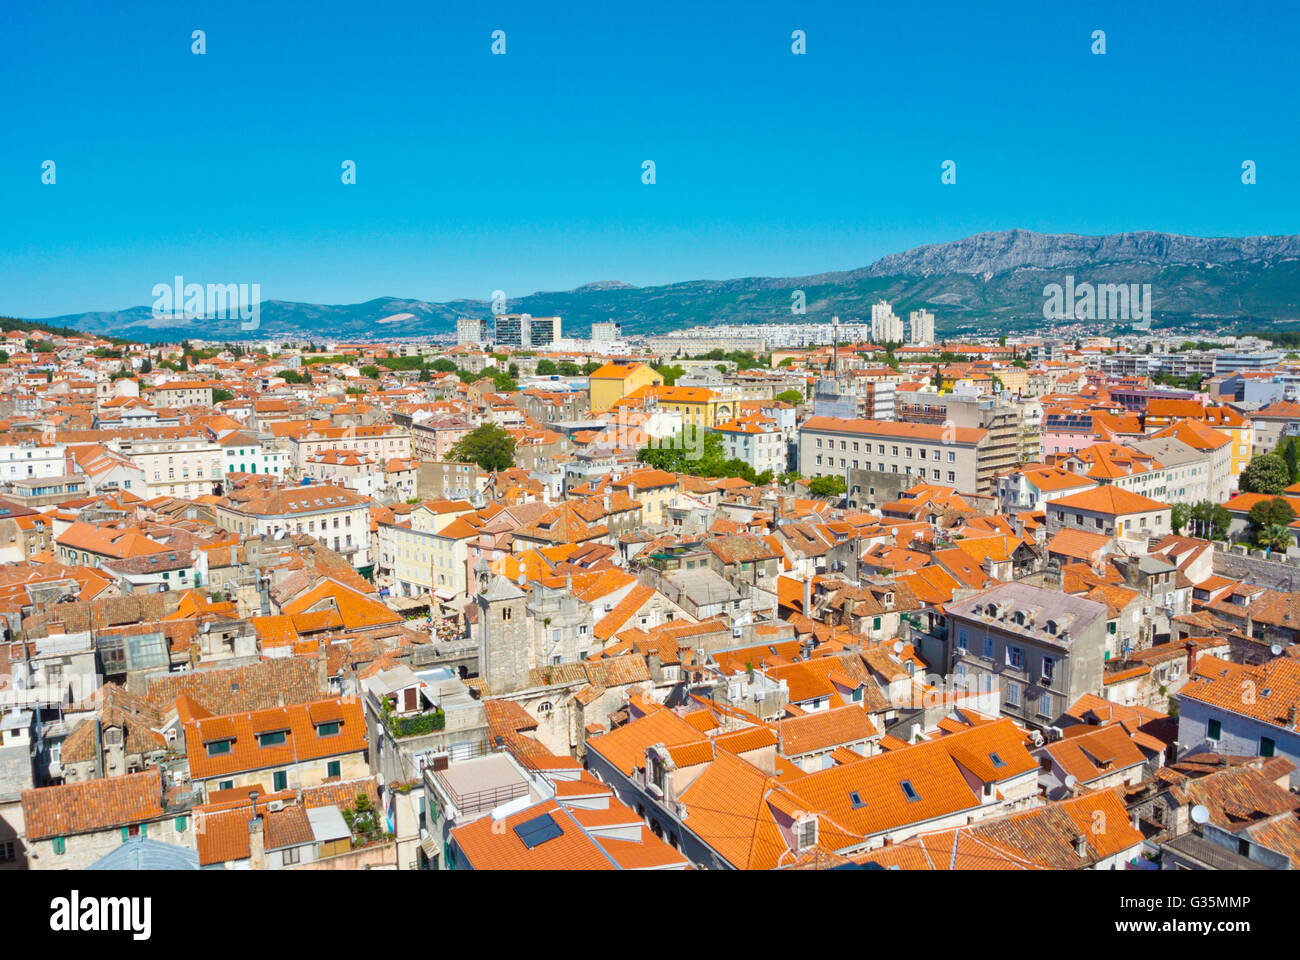 View over old town inlands towards Poljud stadium and Zagorje, Split, Dalmatia, Croatia Stock Photo